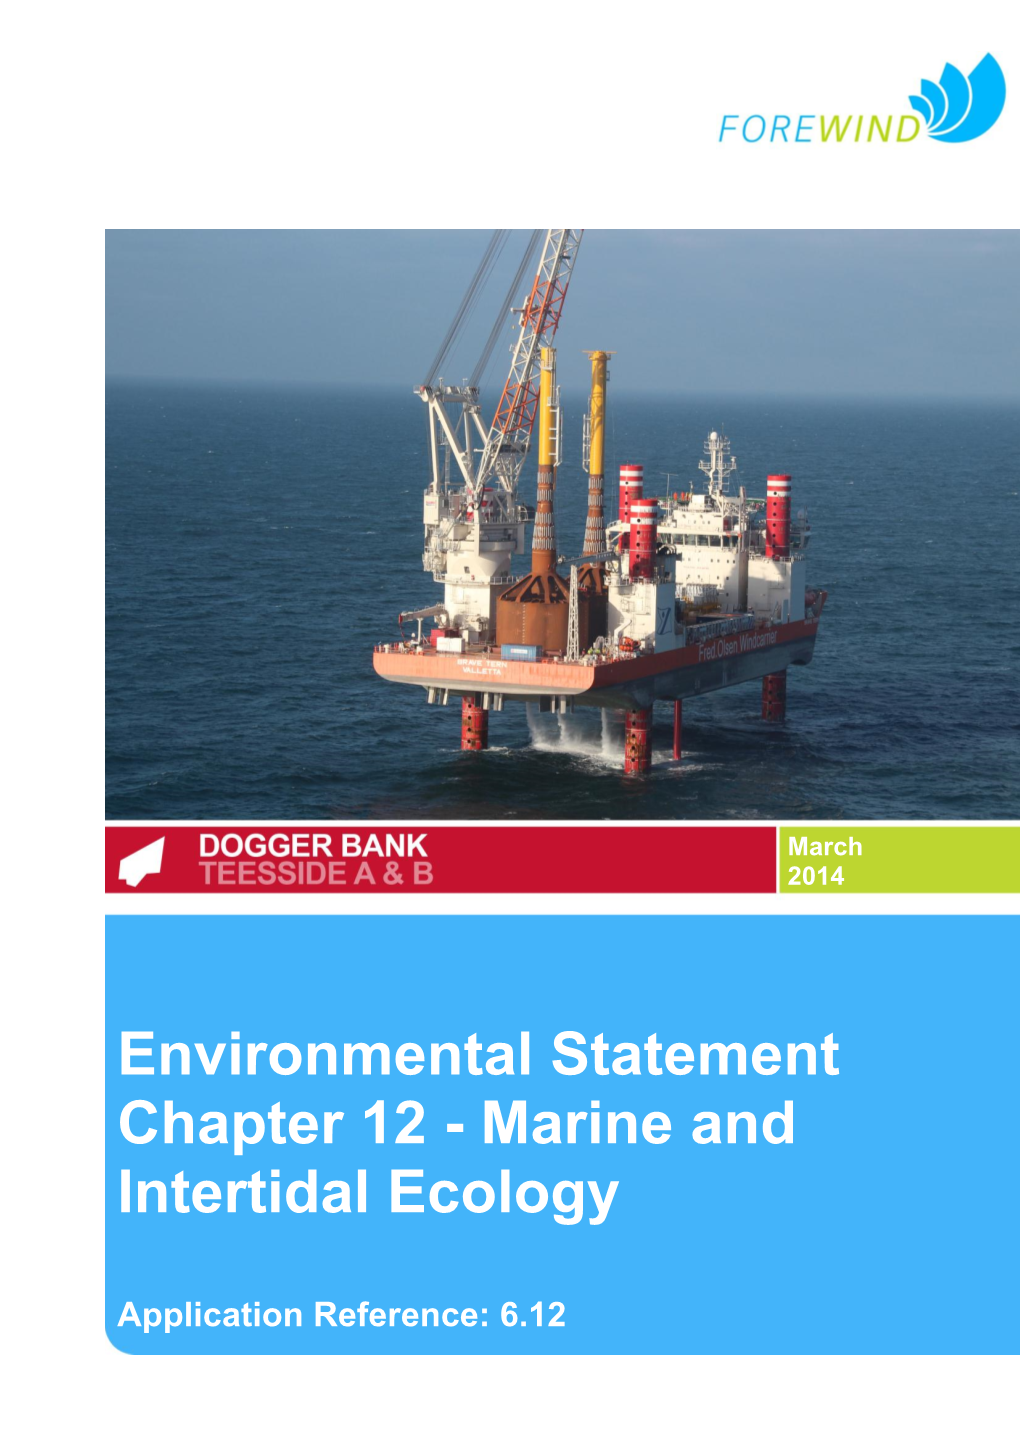 DOGGER BANK Environmental Statement Chapter 12